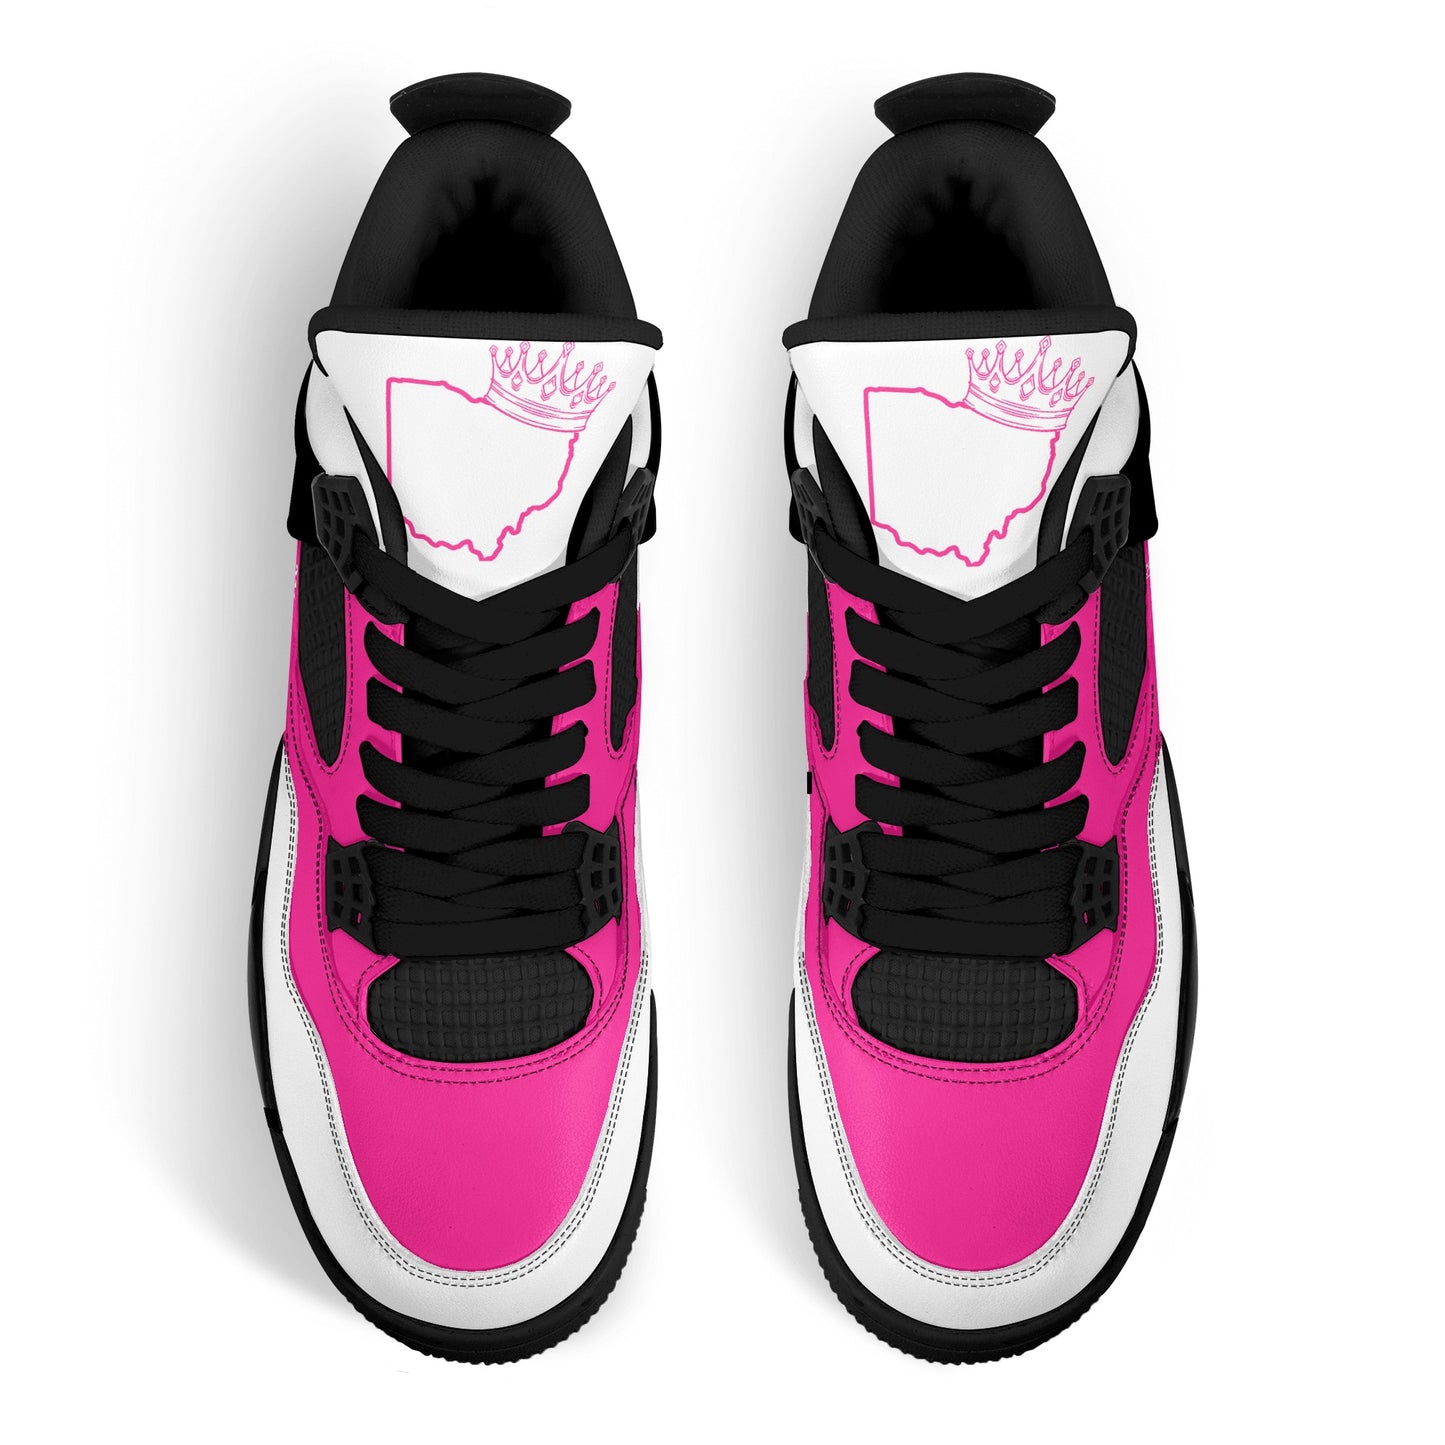 Mens Yo Royal Pink Grey Sneakers